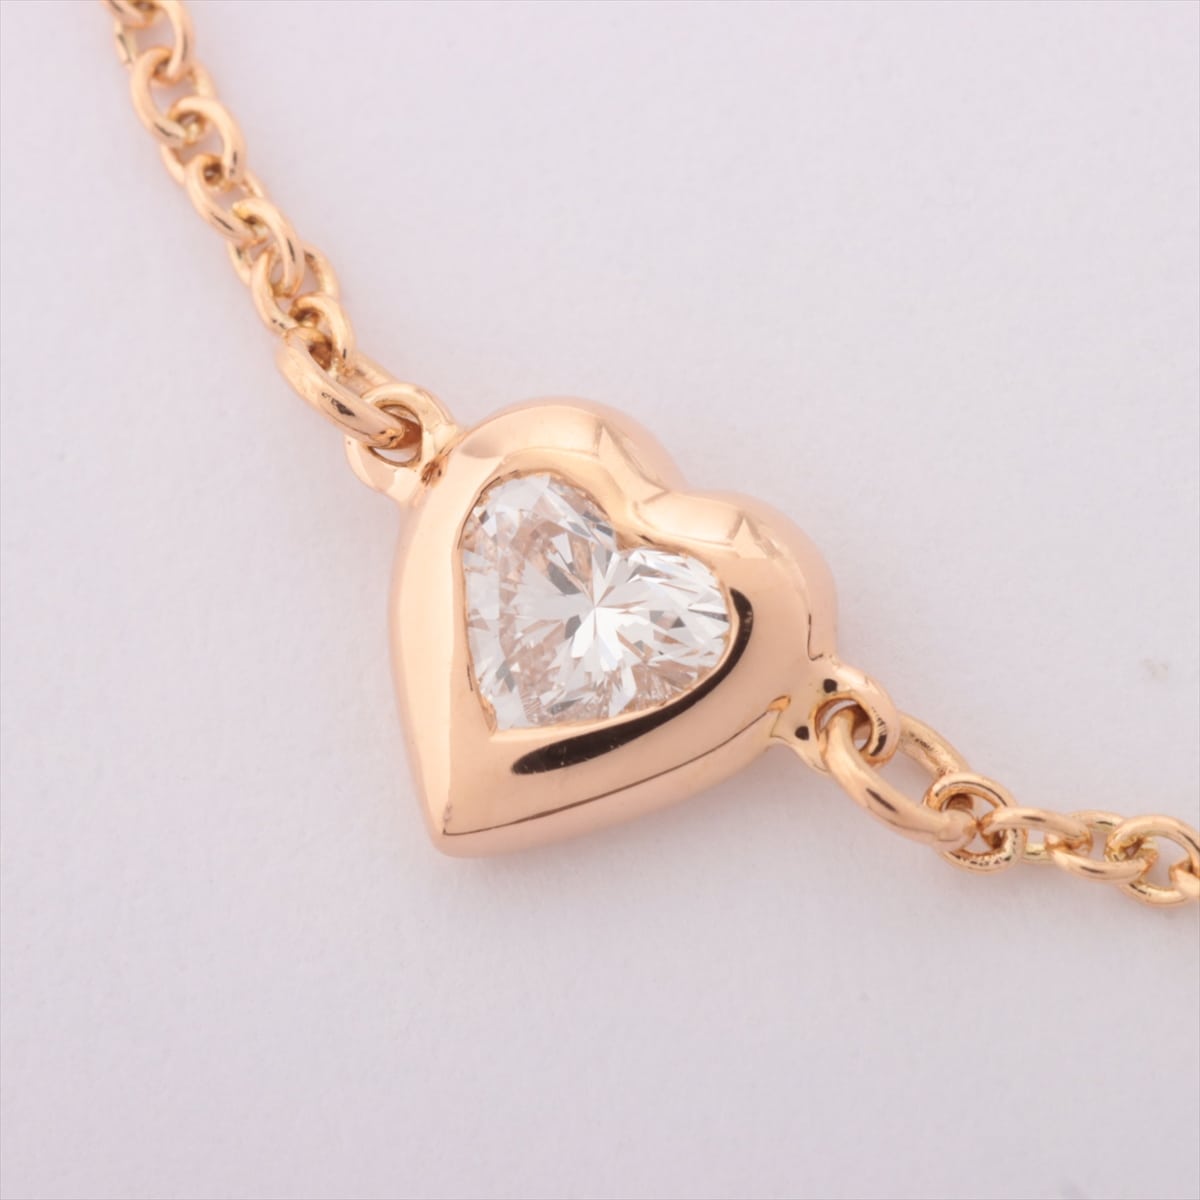 Tiffany By the Yard hearts diamond Bracelet 750(PG) 1.3g